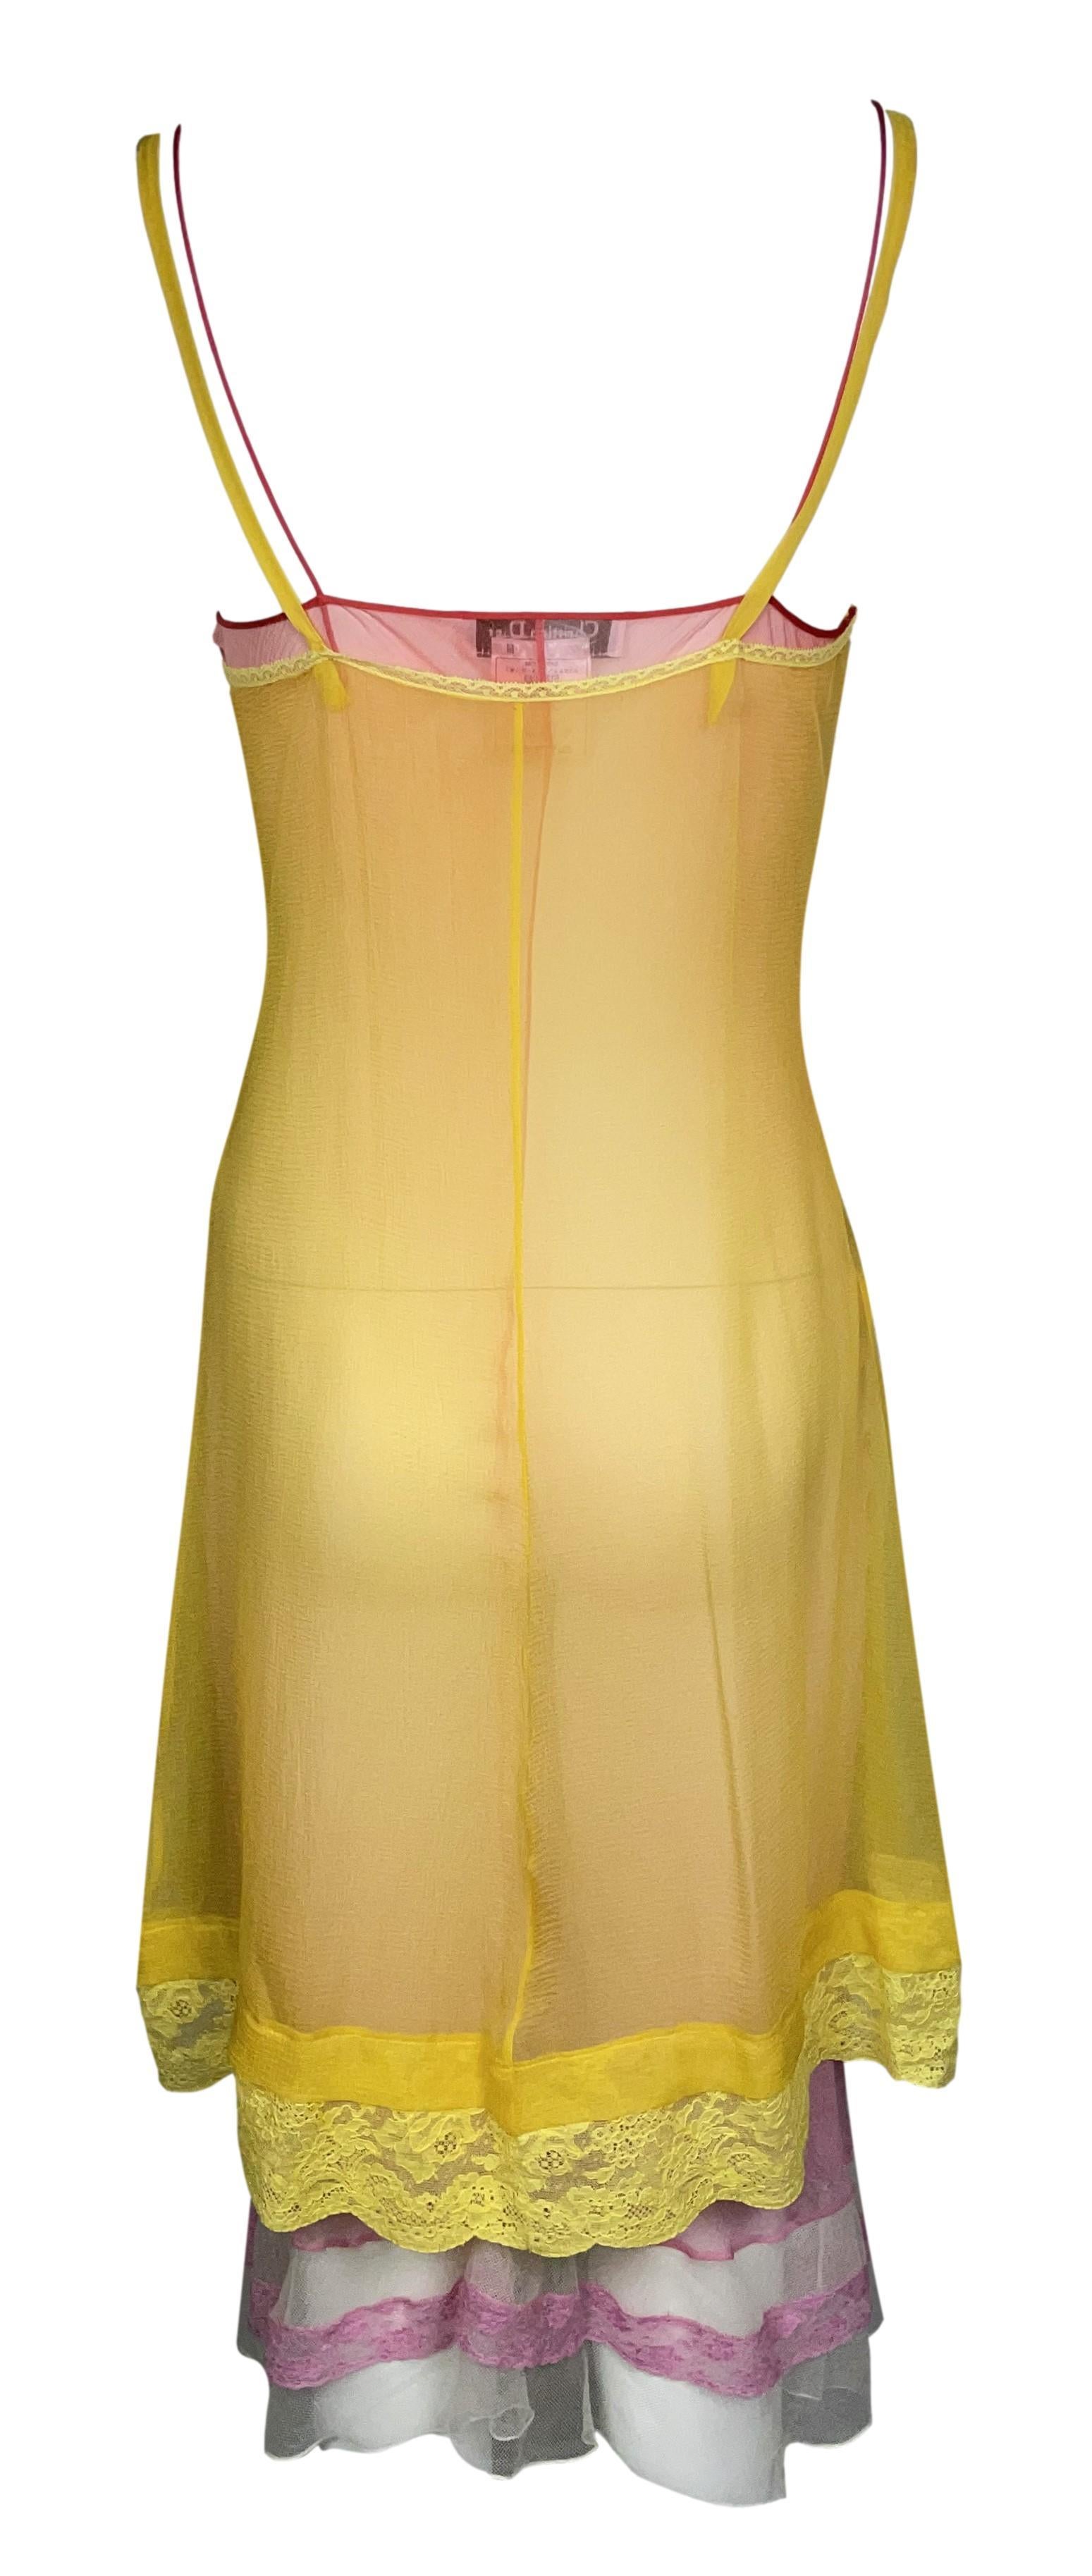 Women's S/S 2005 Christian Dior by John Galliano Runway Sheer Pink & Yellow Silk Dress